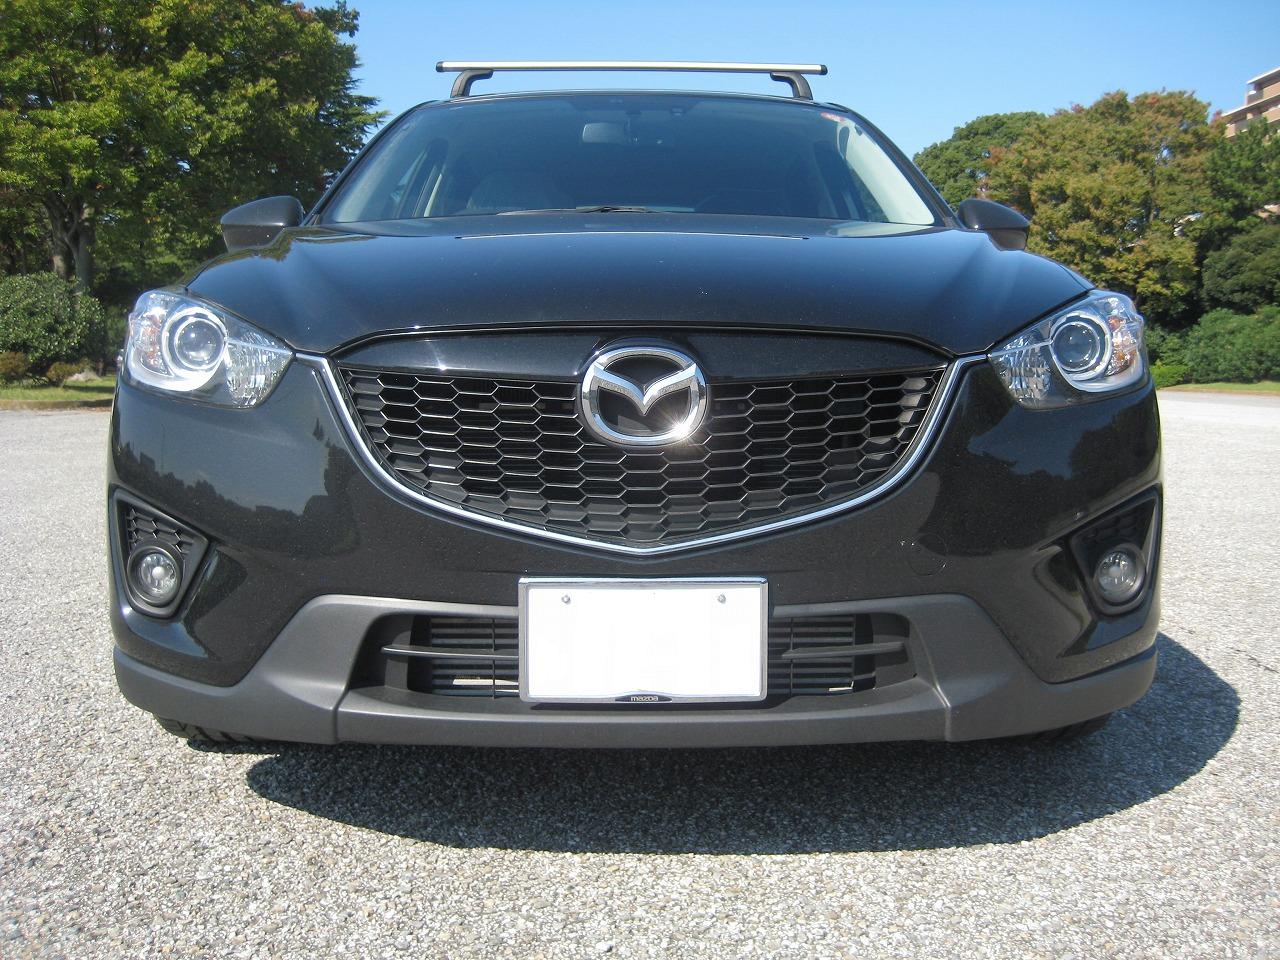 Mazda Cx 5用ネジ式車高調整サスペンションキット発売 ビルシュタイン日記 足回りに興味がある人へのマニアックブログ